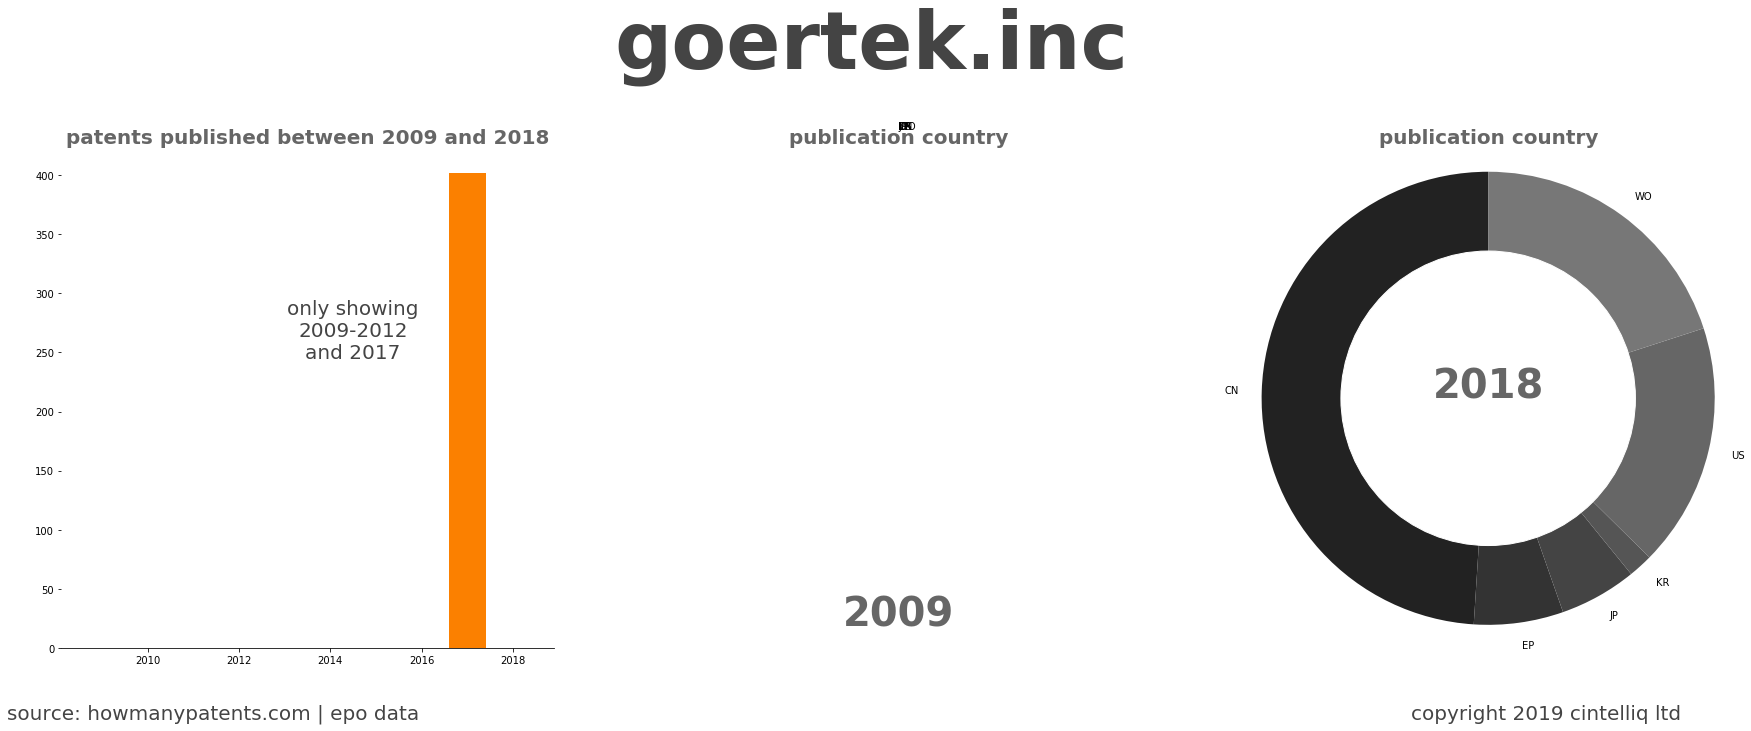 summary of patents for Goertek.Inc